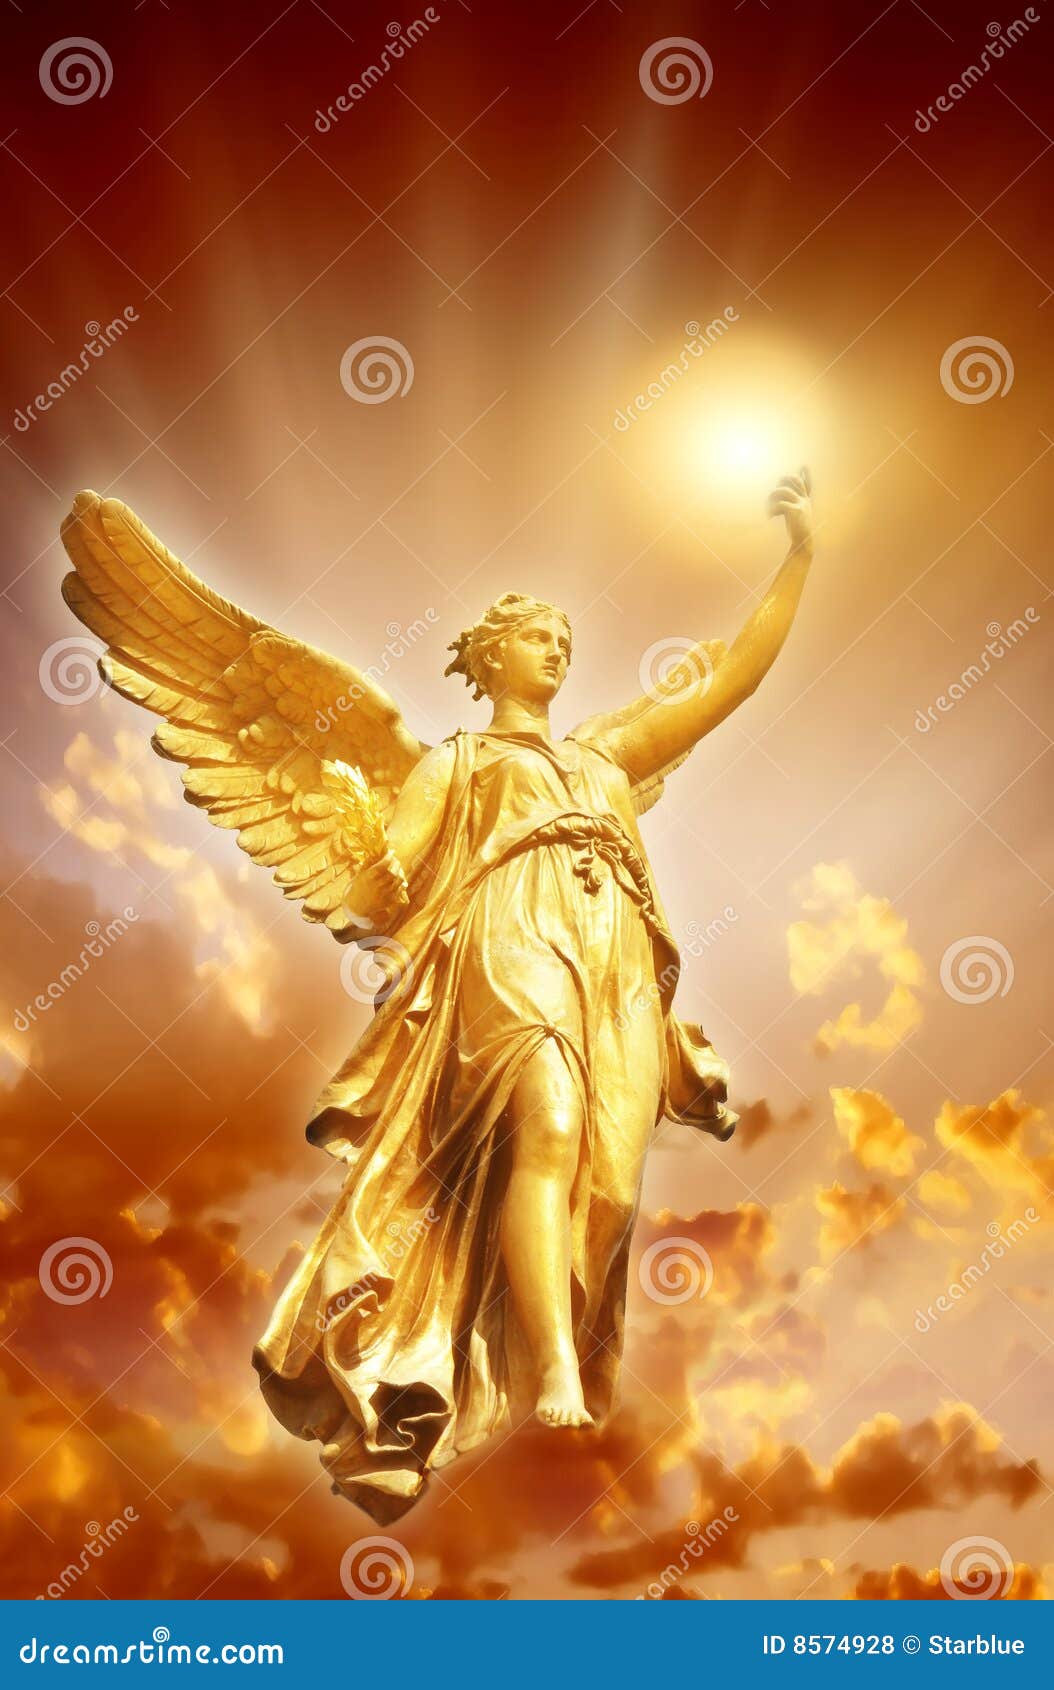 angel of divine light